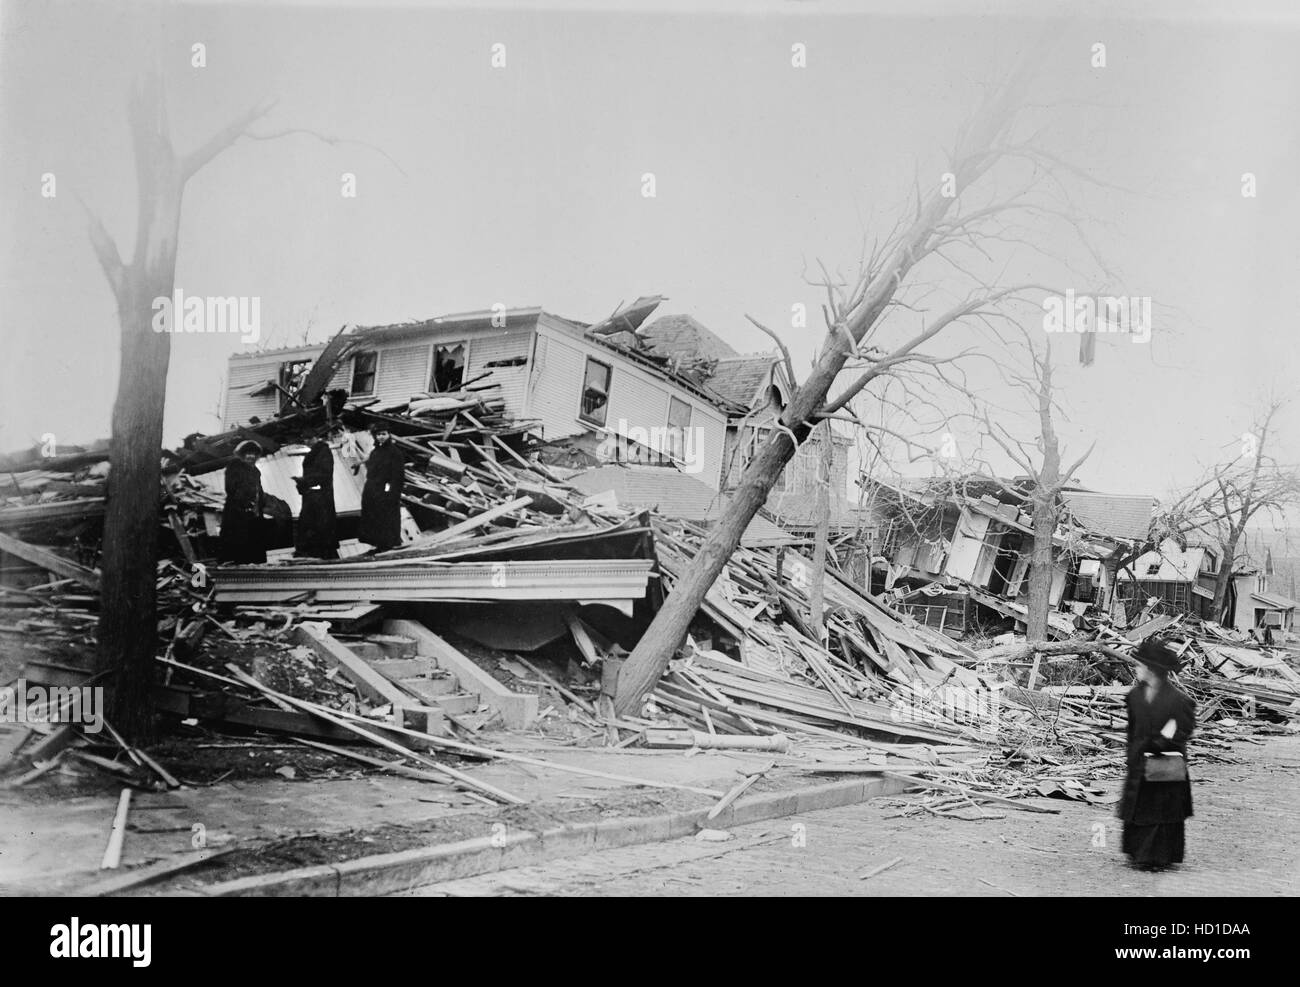 Tornado Destruction, Omaha, Nebraska, USA, Bain News Service, March 1913  Stock Photo - Alamy